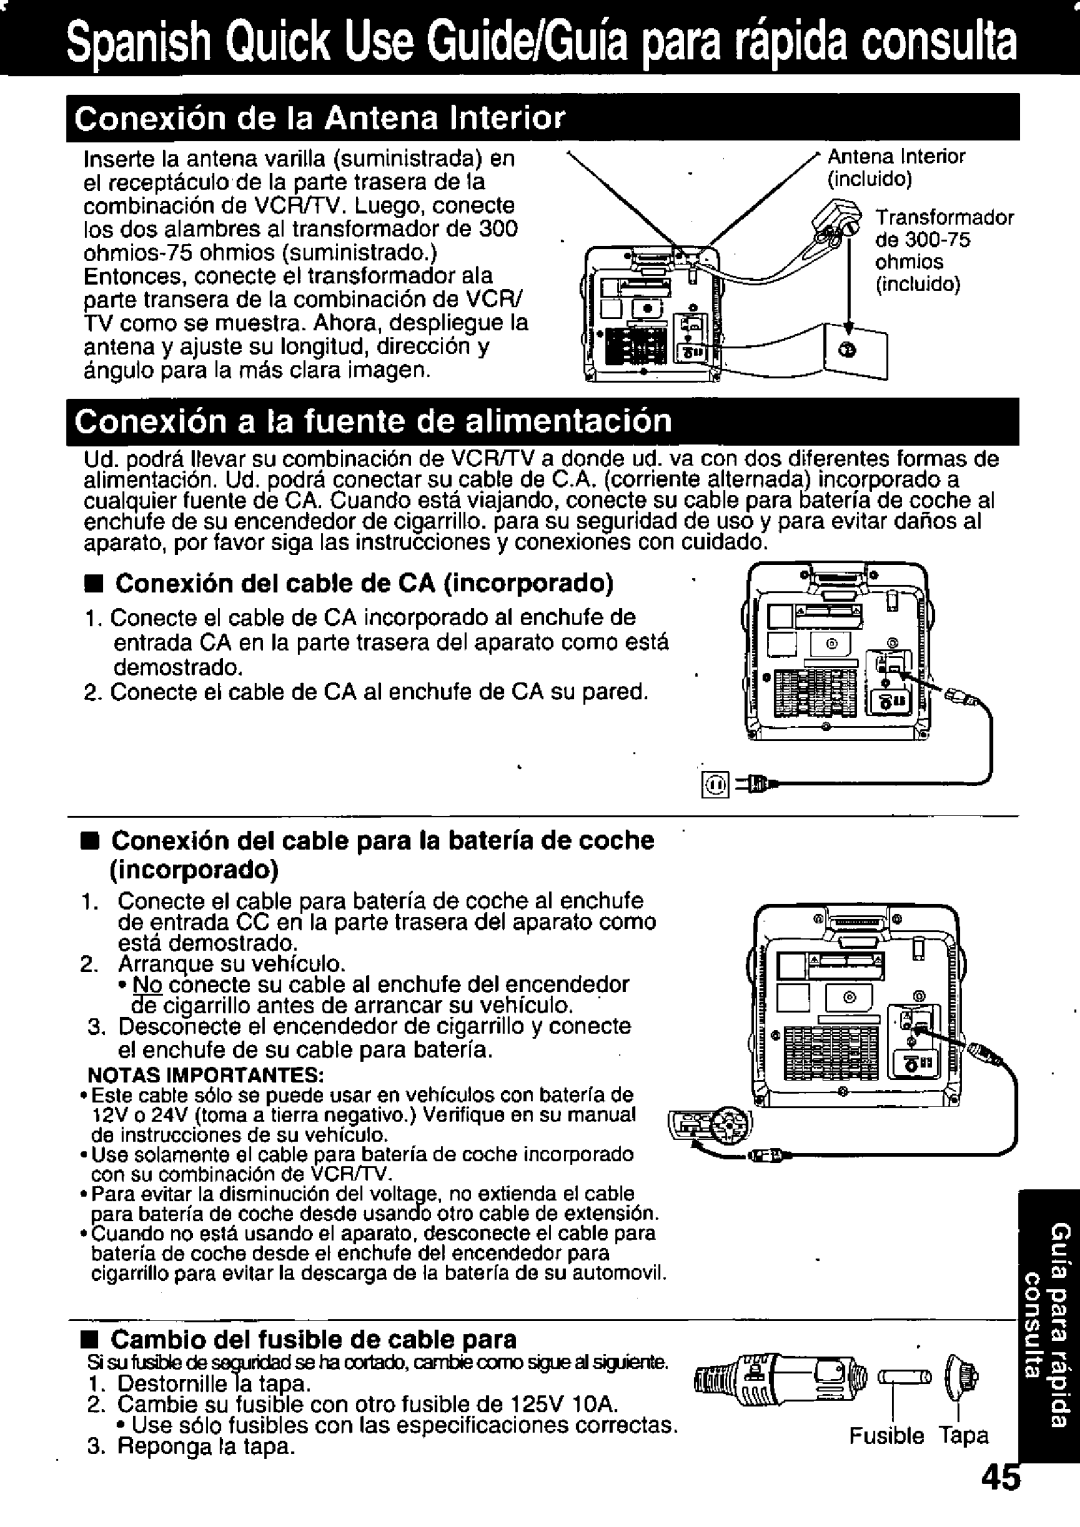 Panasonic PV-C911 manual 